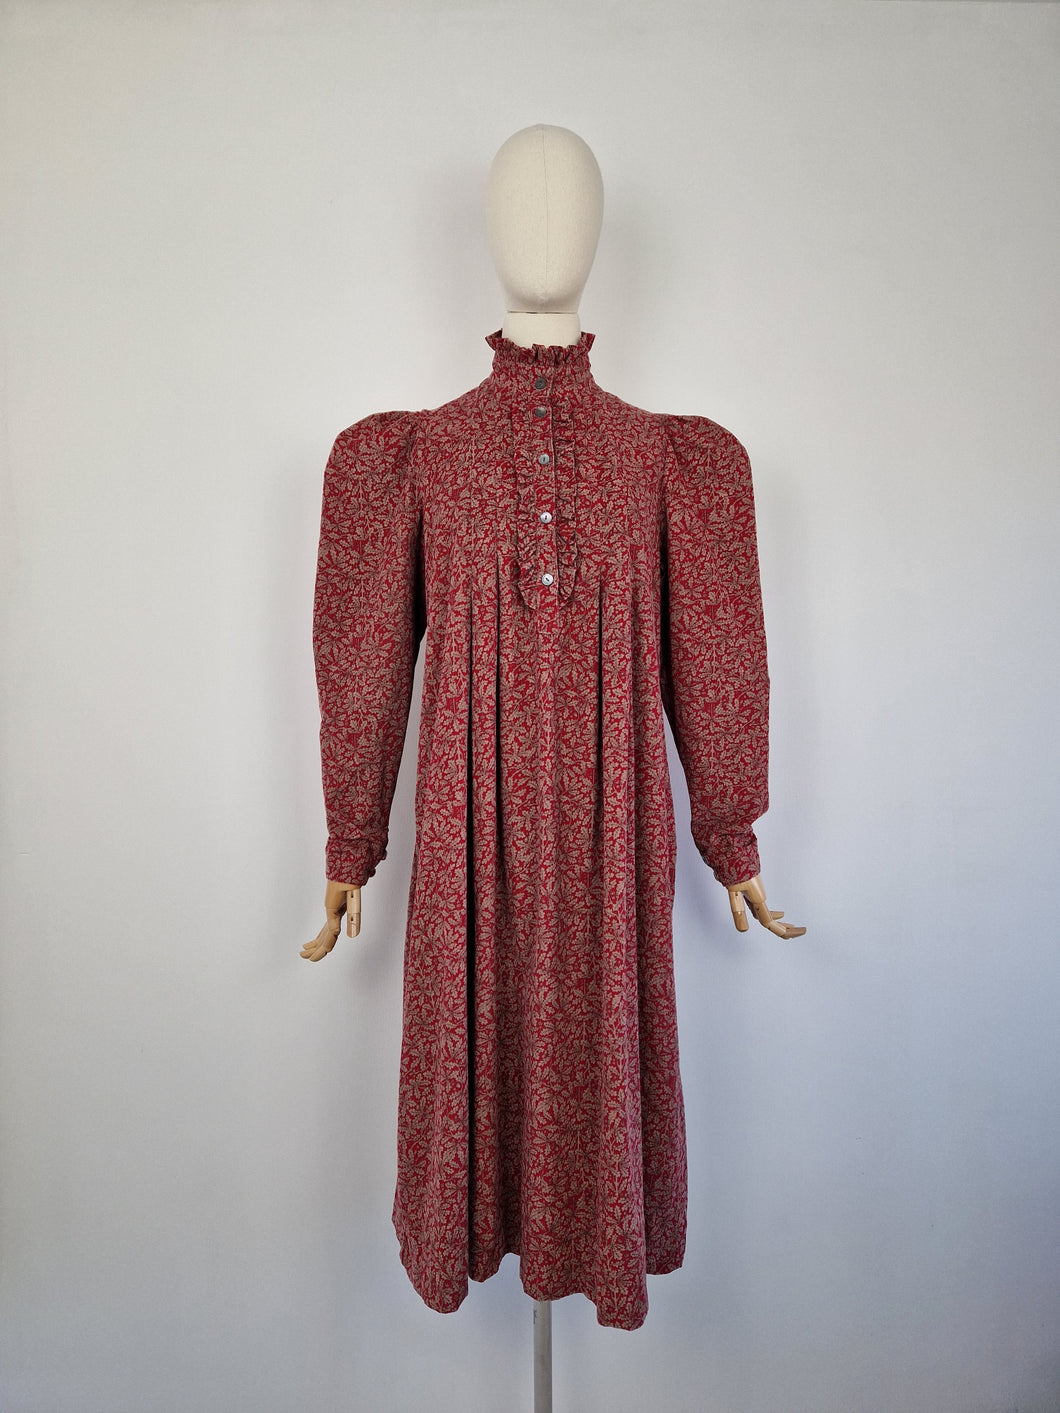 Vintage 70s/80s Laura Ashley smock corduroy dress